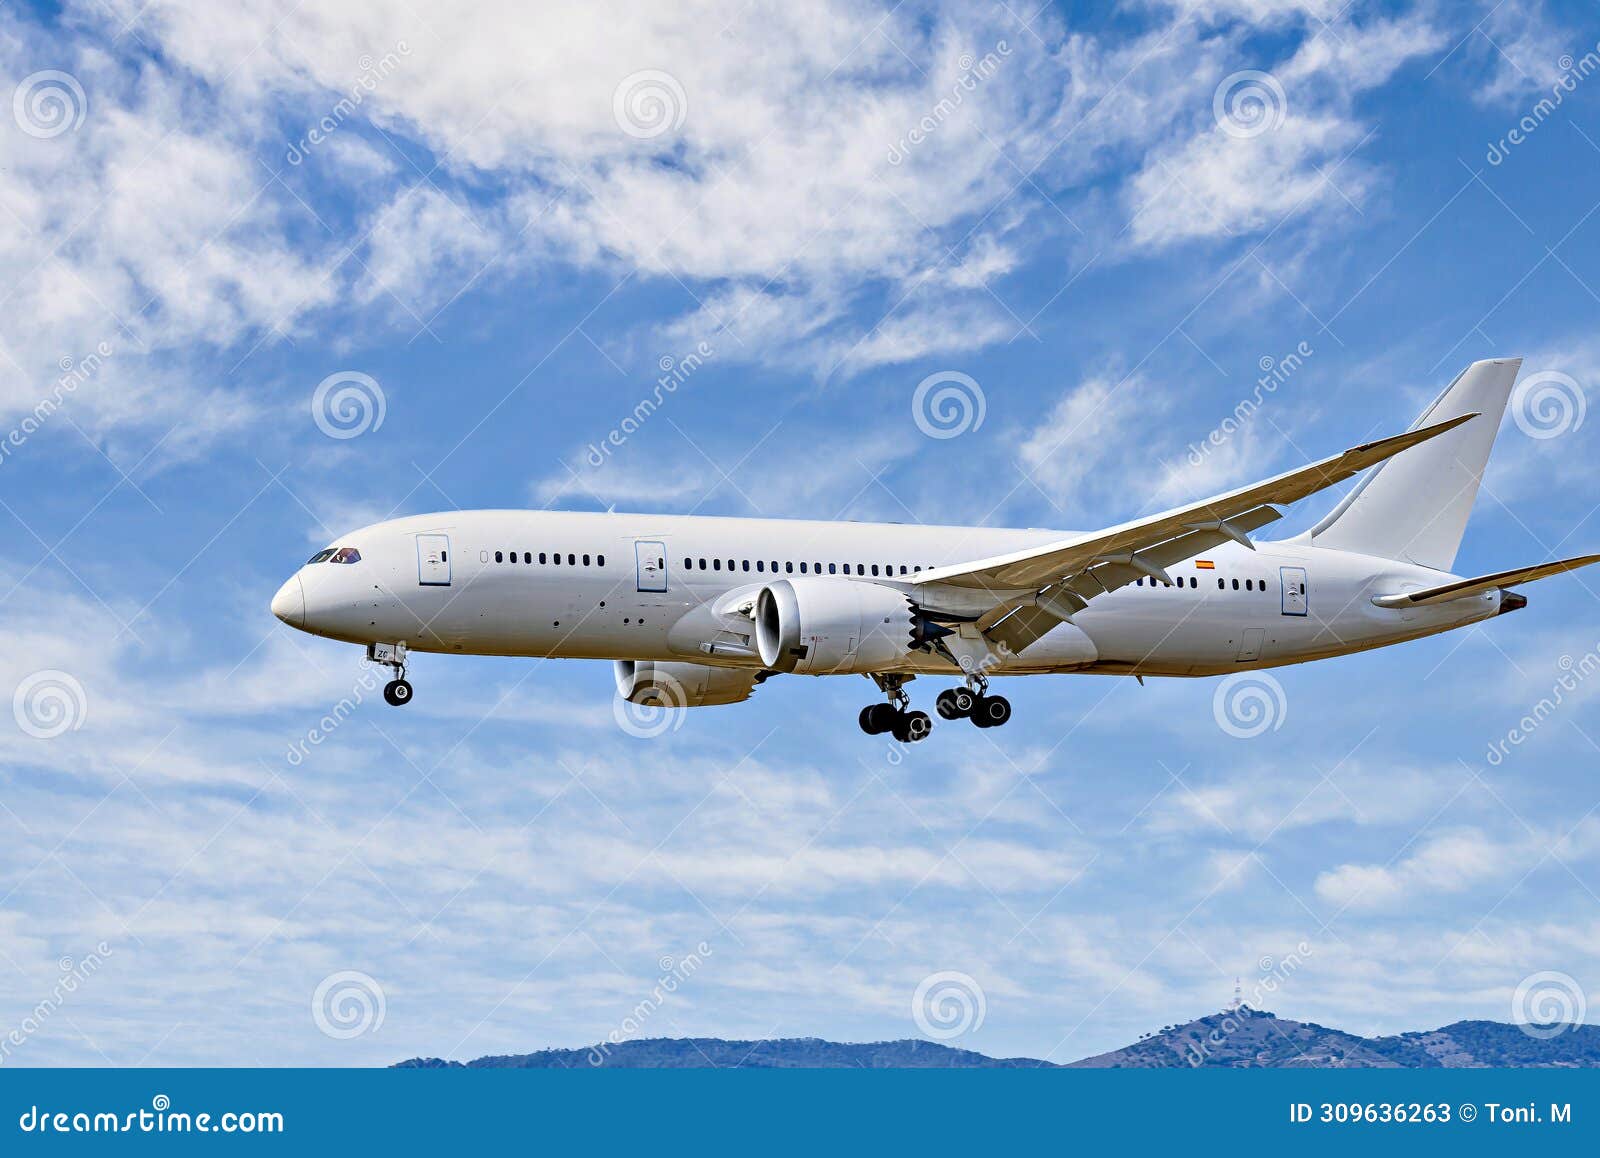 passenger plane landing at the airport